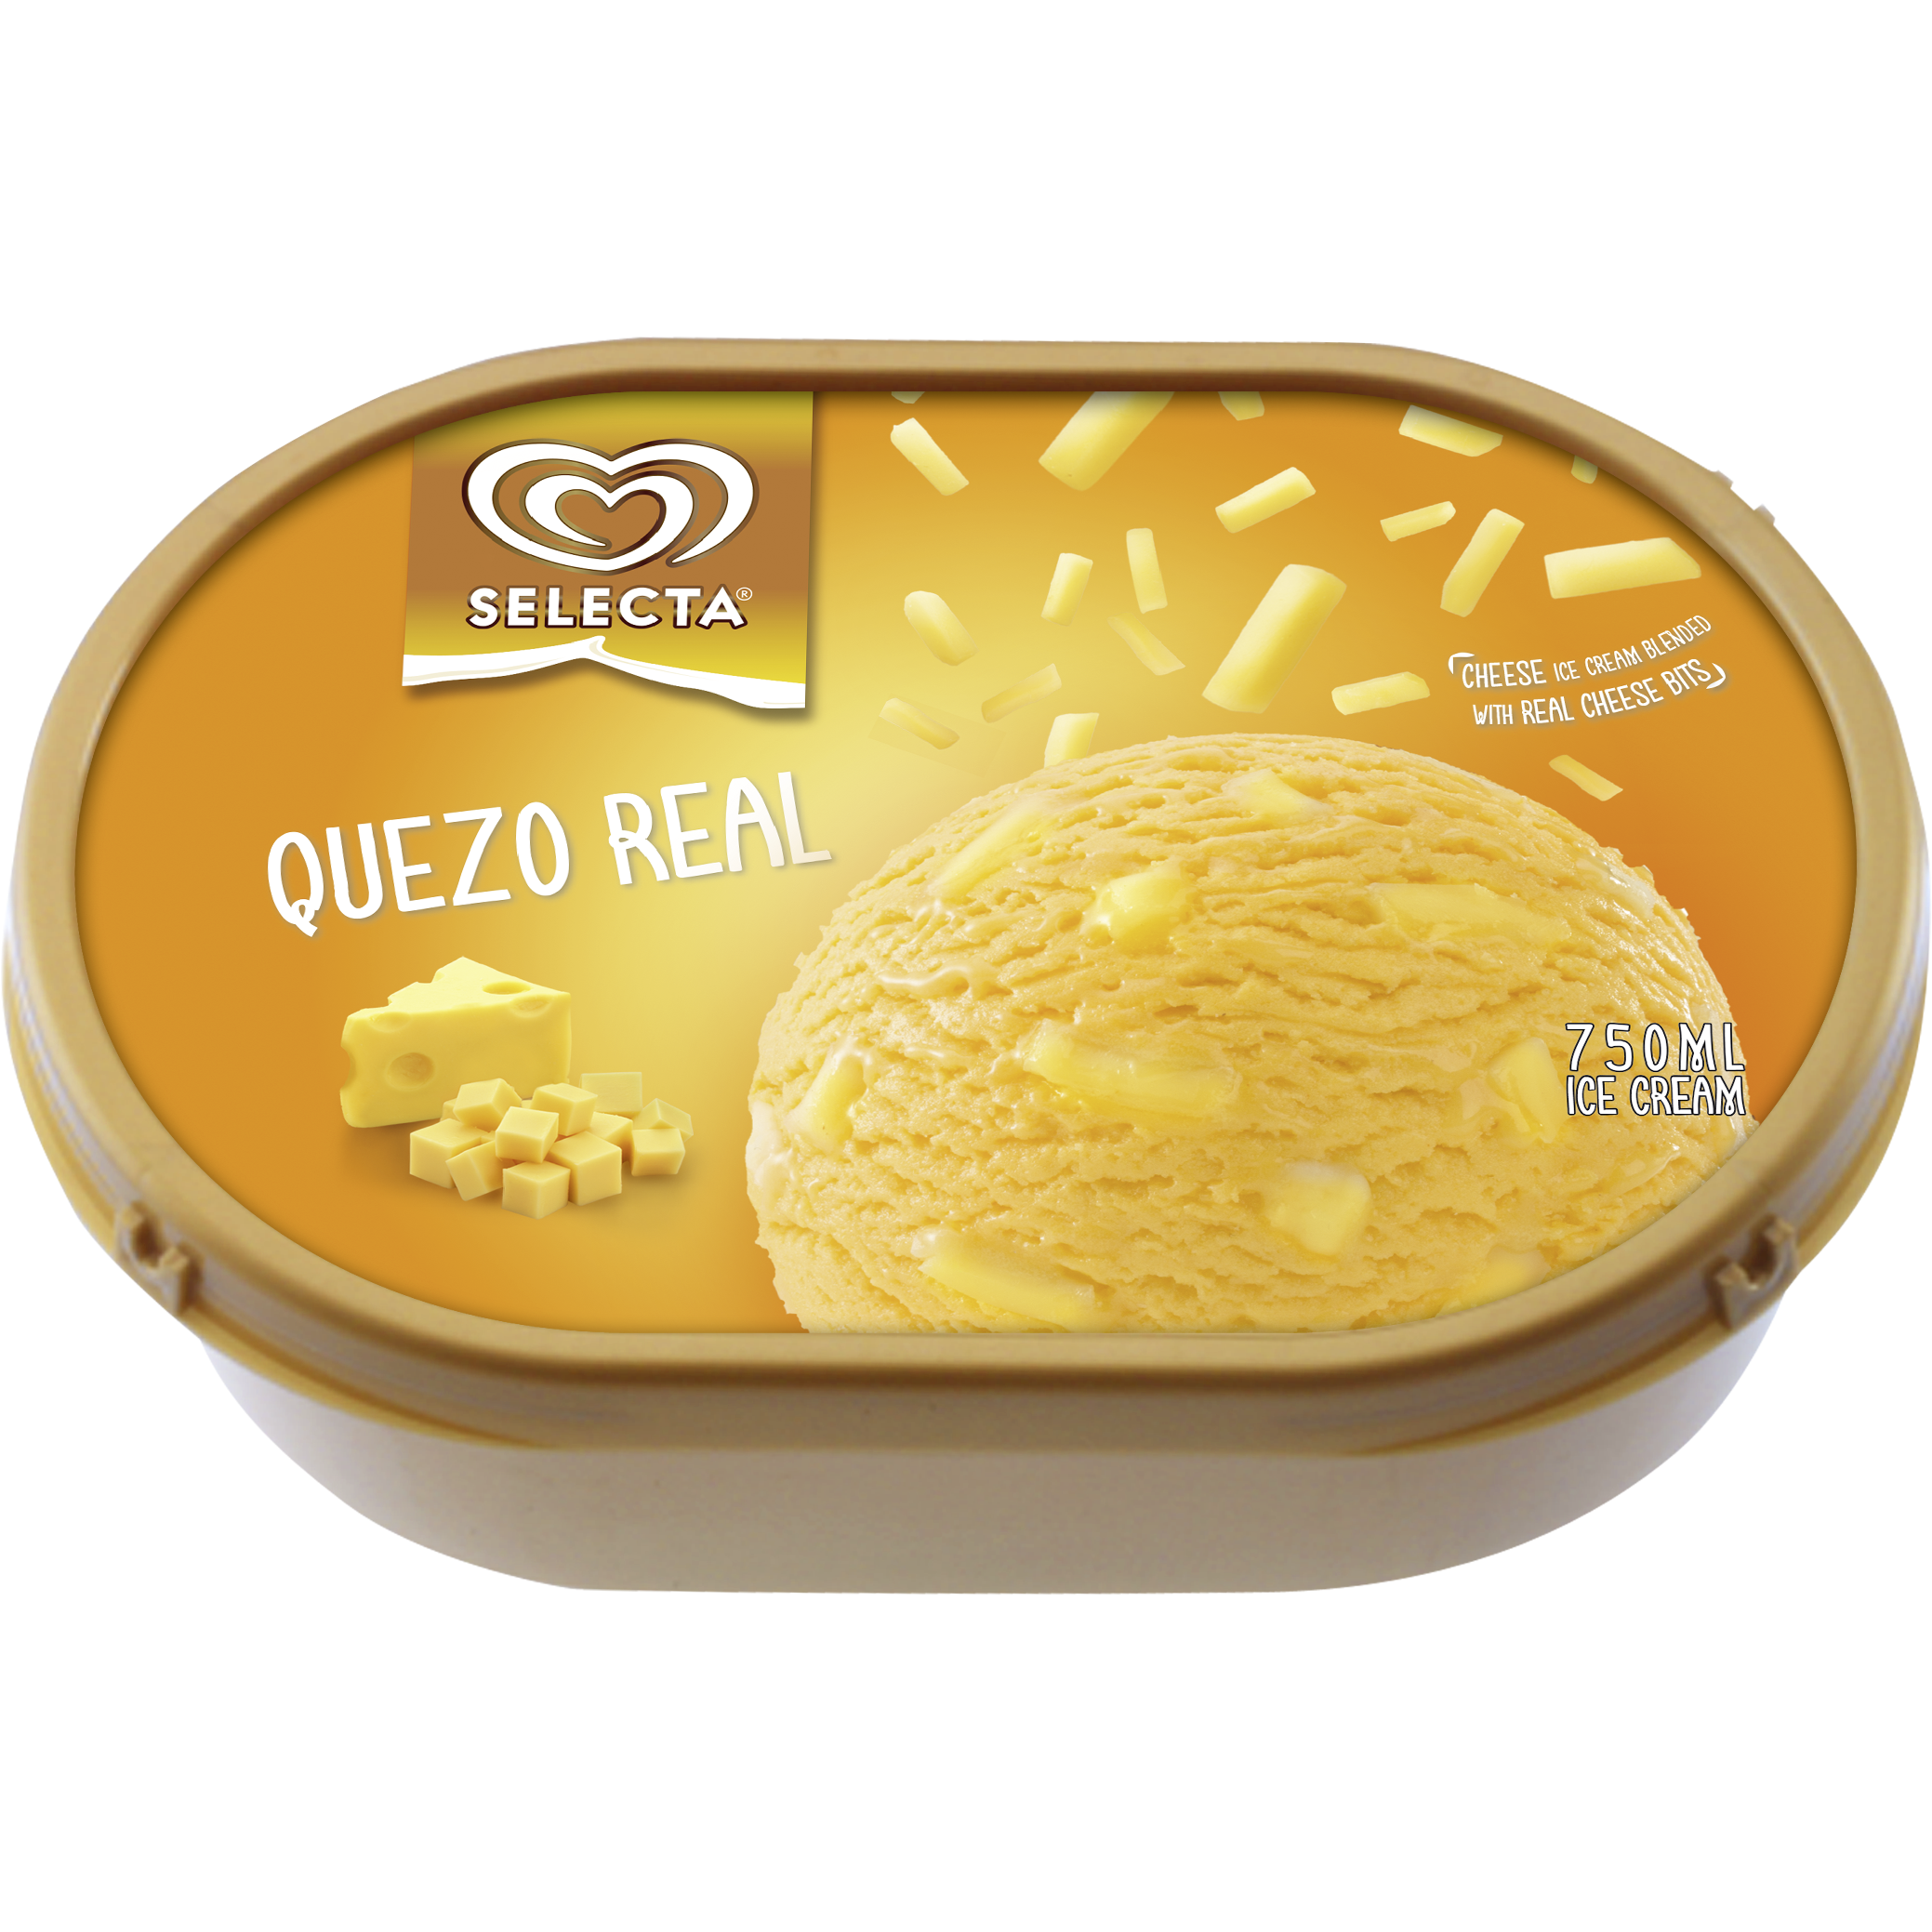 Selecta Supreme Quezo Real Ice Cream